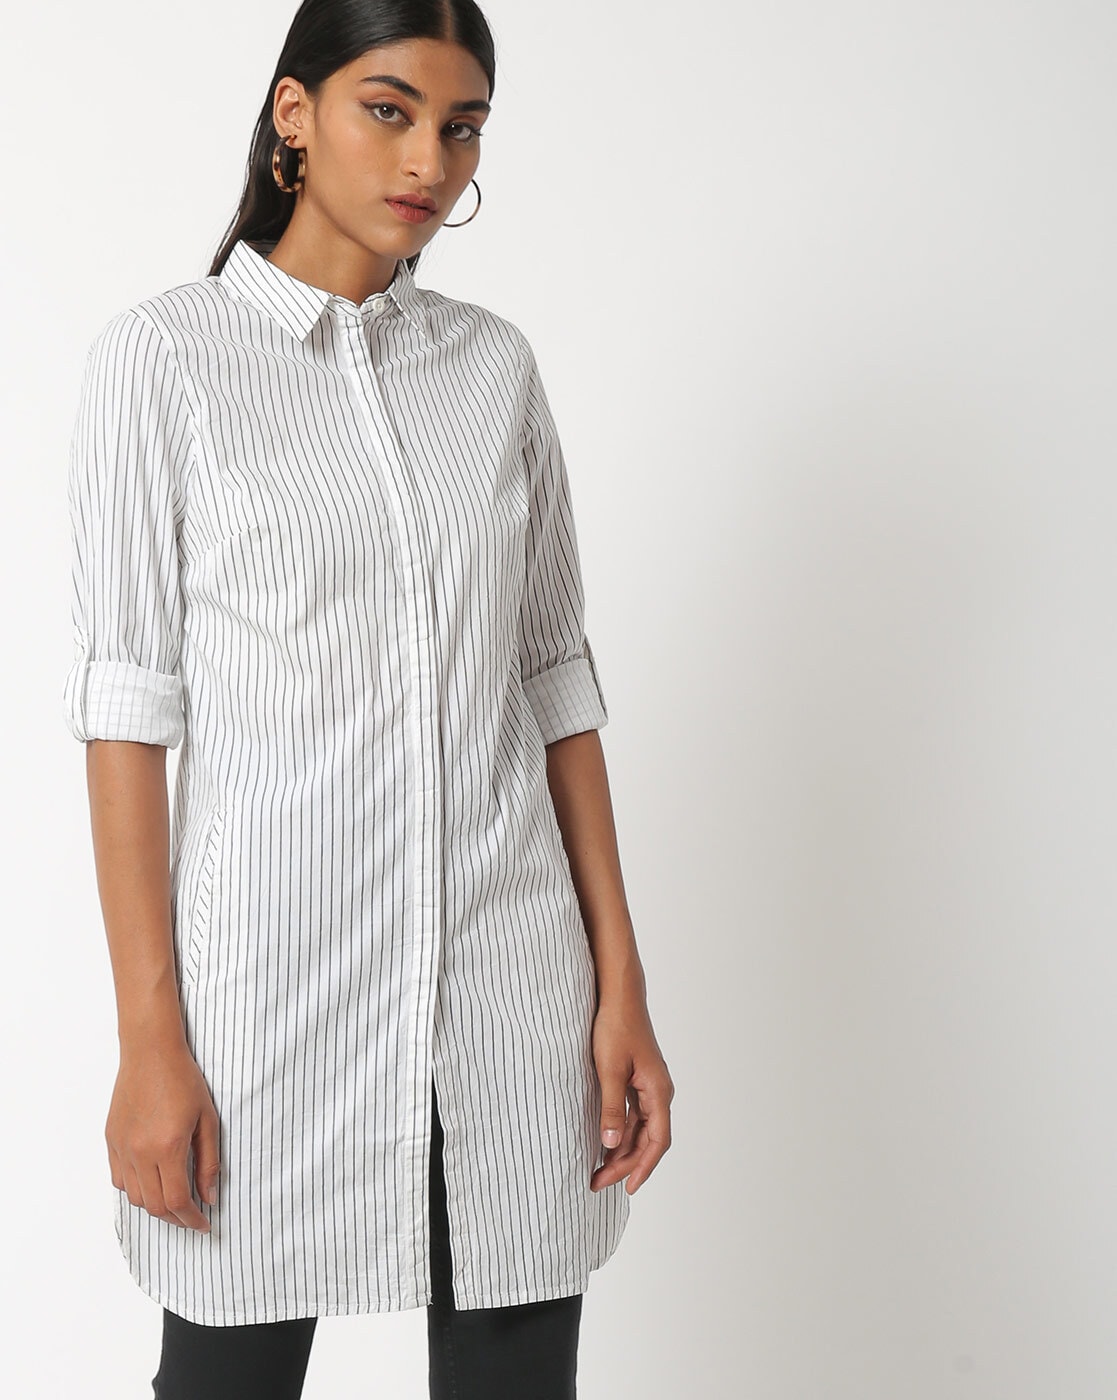 Vero moda Erika Stripe 3/4 Sleeve Shirt White